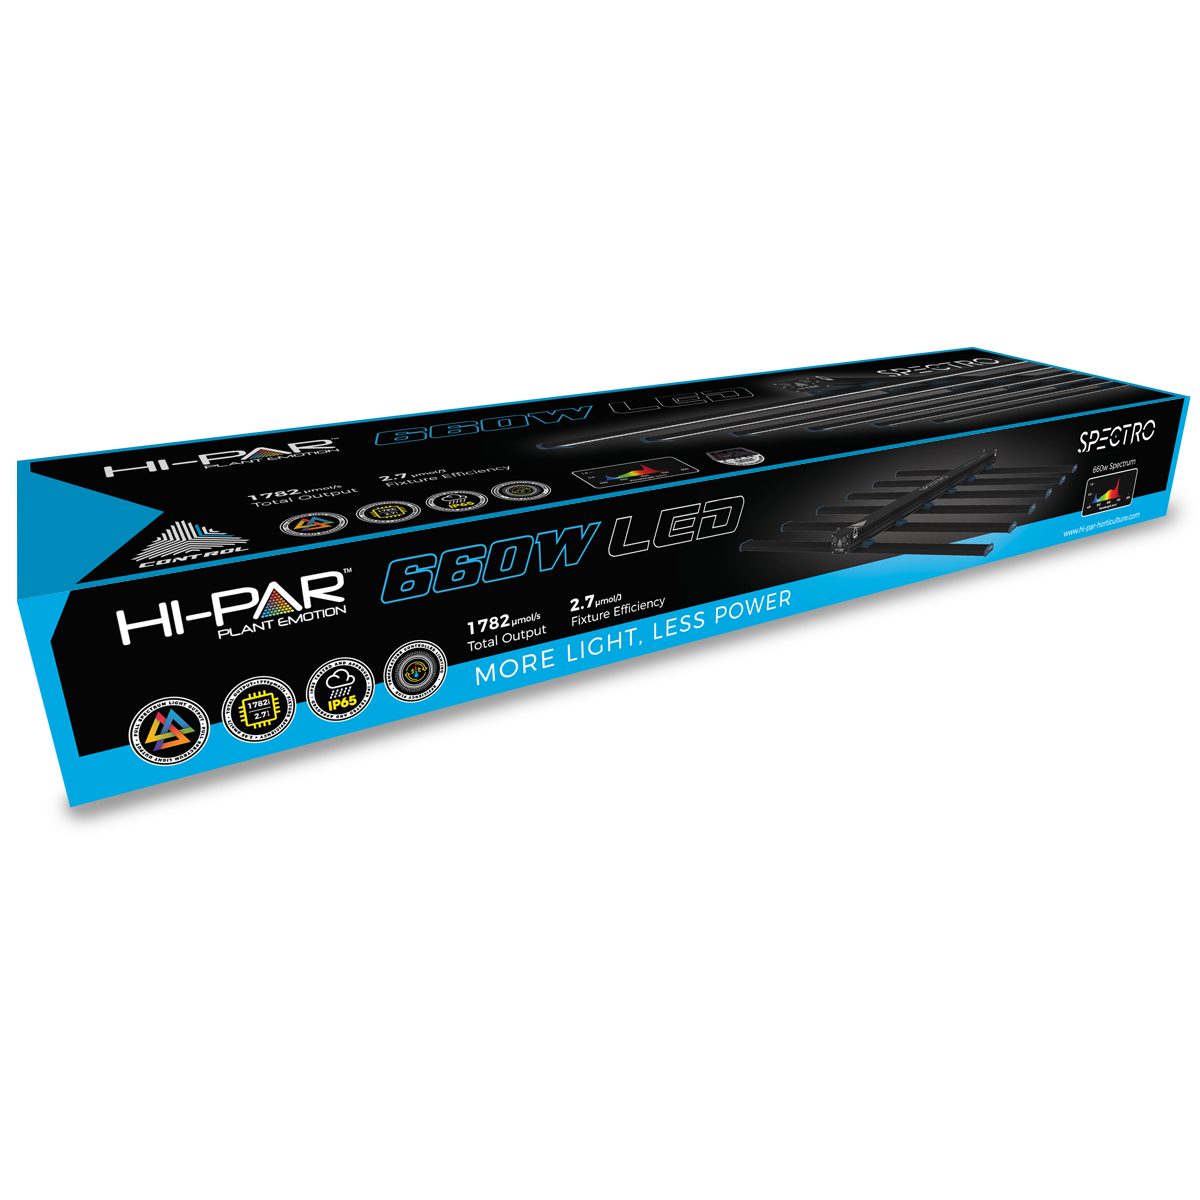 HI-PAR SPECTRO 660w LED Light